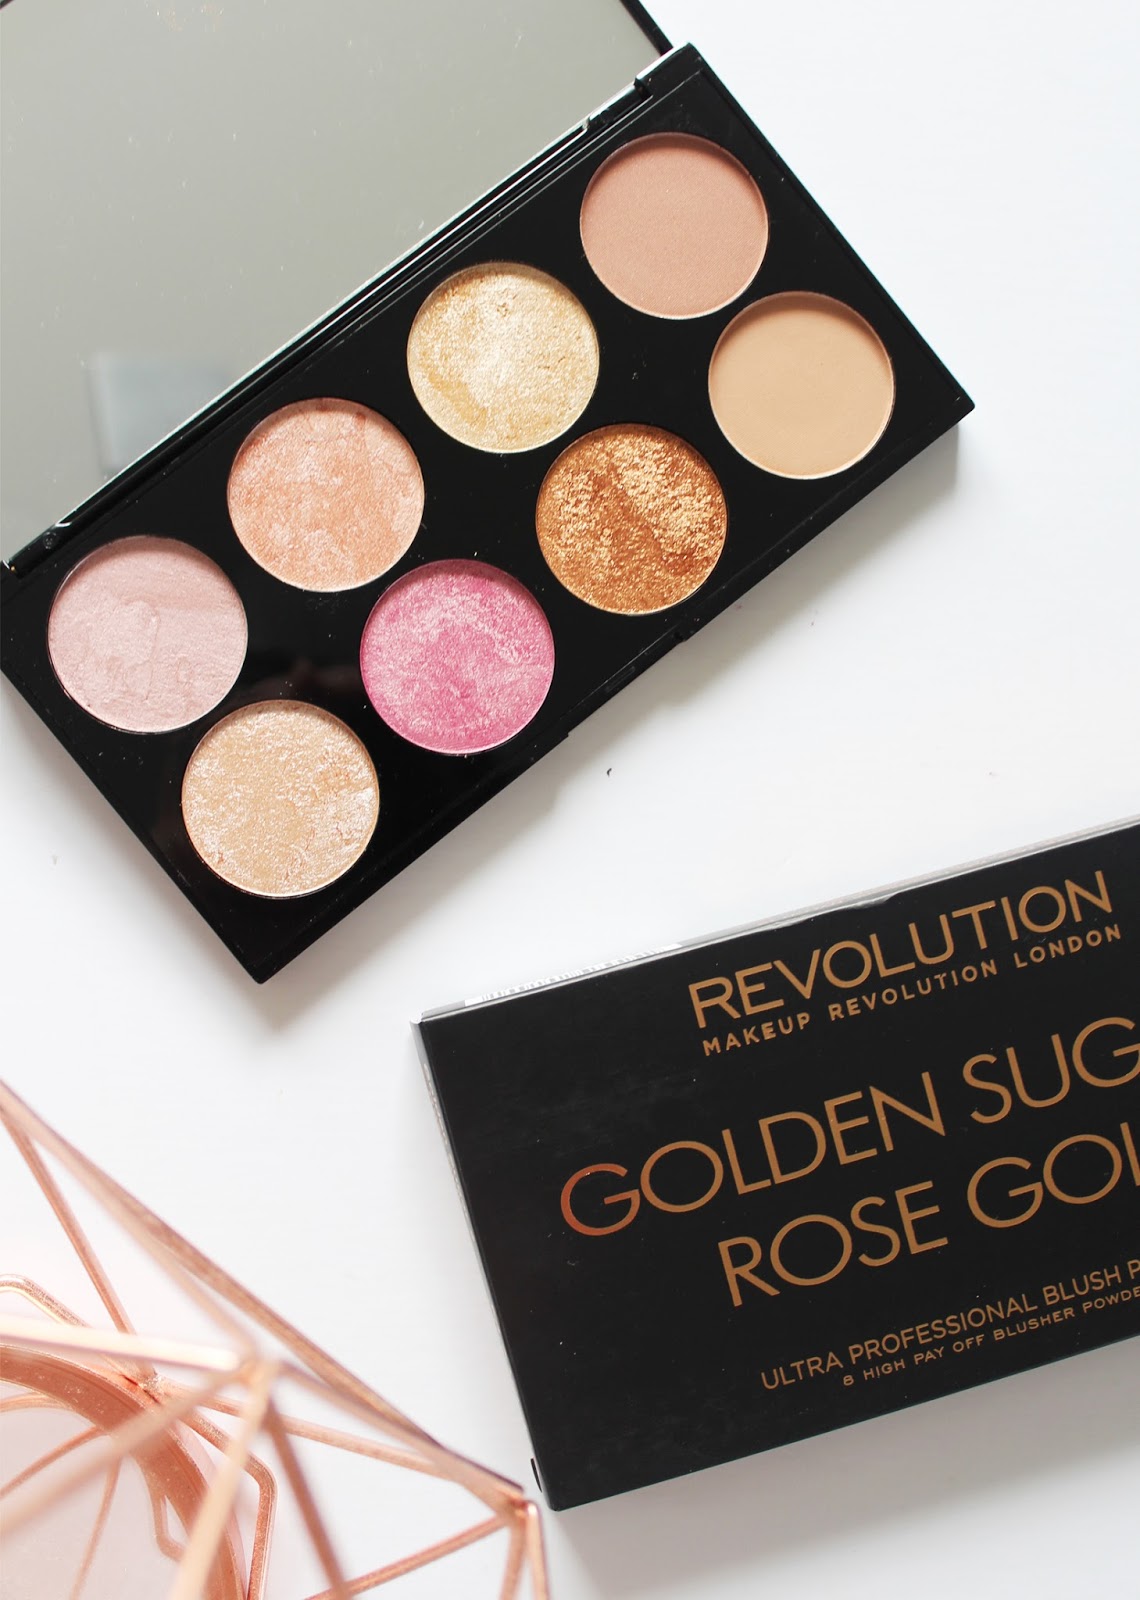 MAKEUP REVOLUTION | Golden Sugar 2 Rose Gold Blush Palette - Review + Swatches